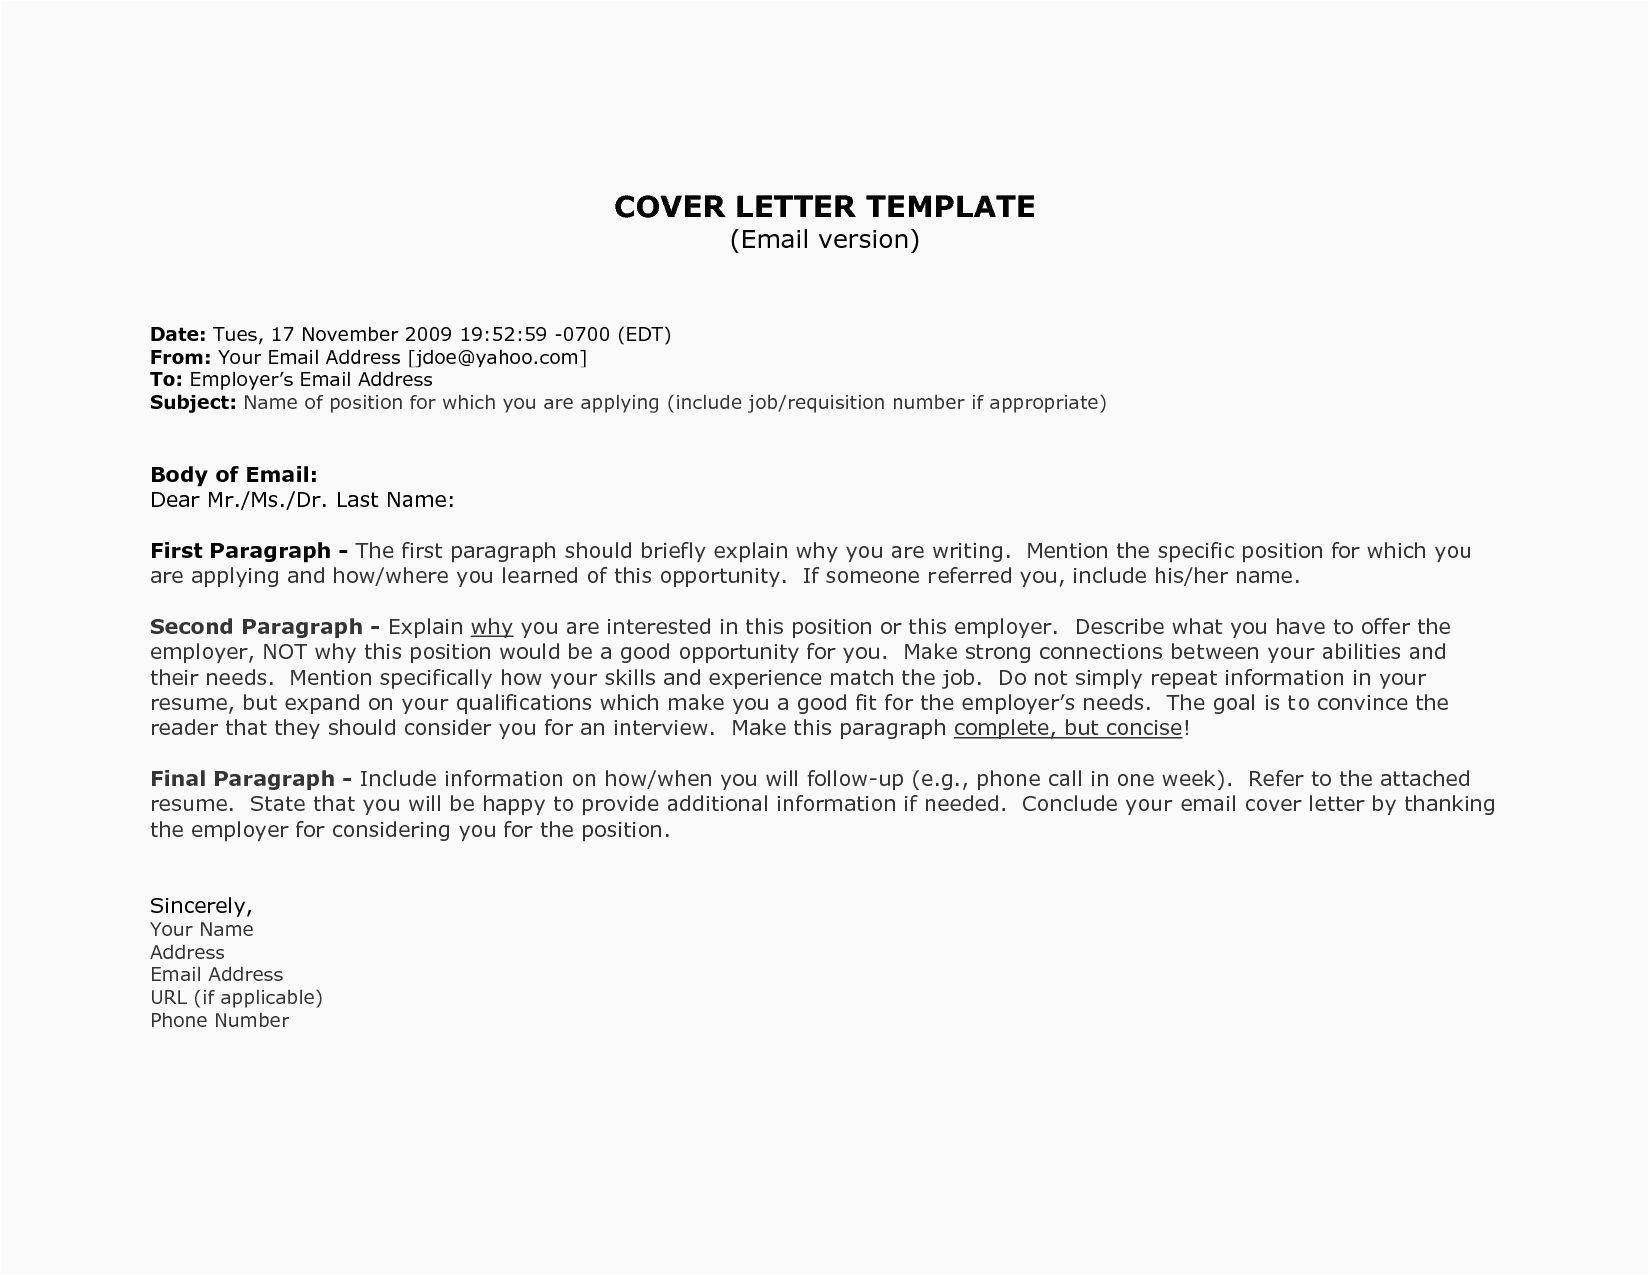 Sample Resume Cover Letter for First Job 1st Job Cover Letter Template Resume format